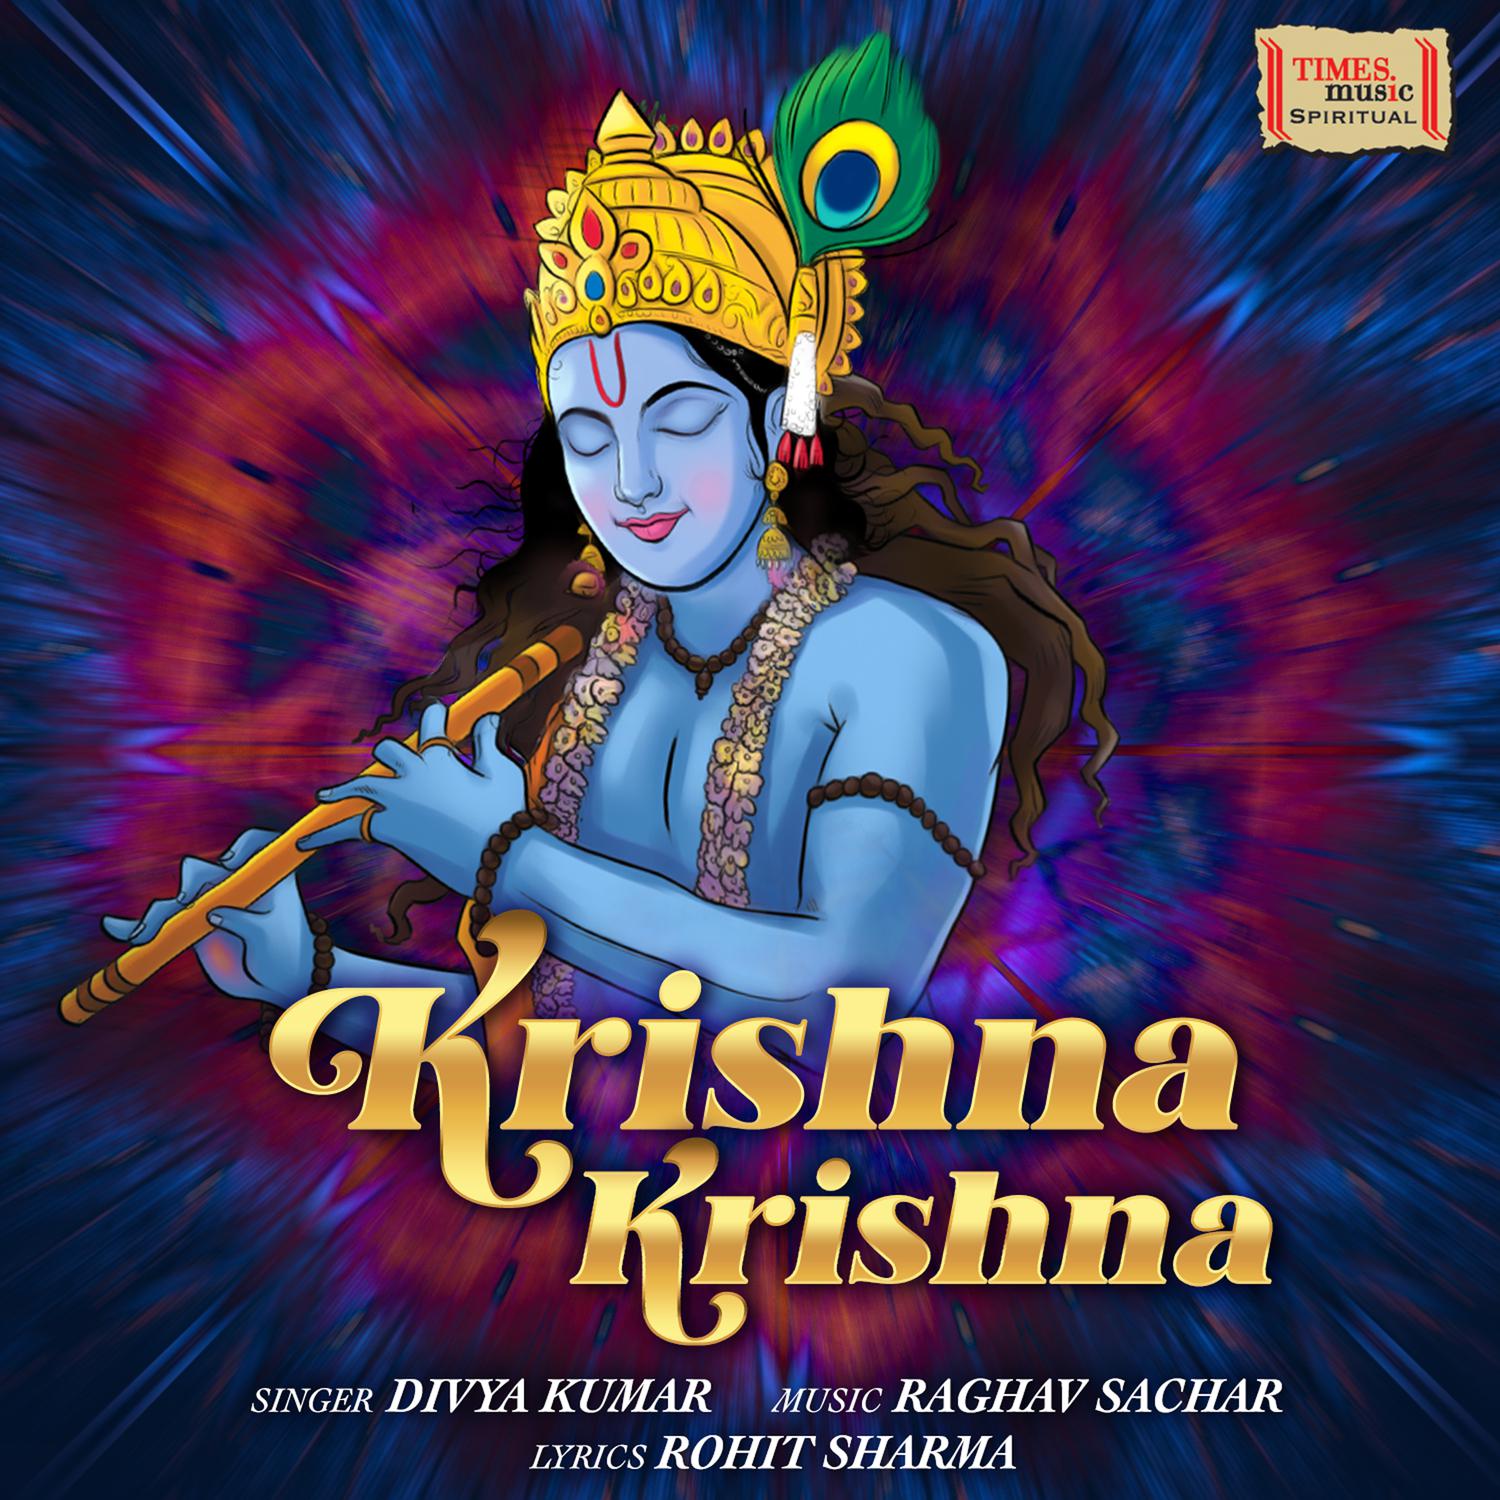 Divya Kumar - Krishna Krishna